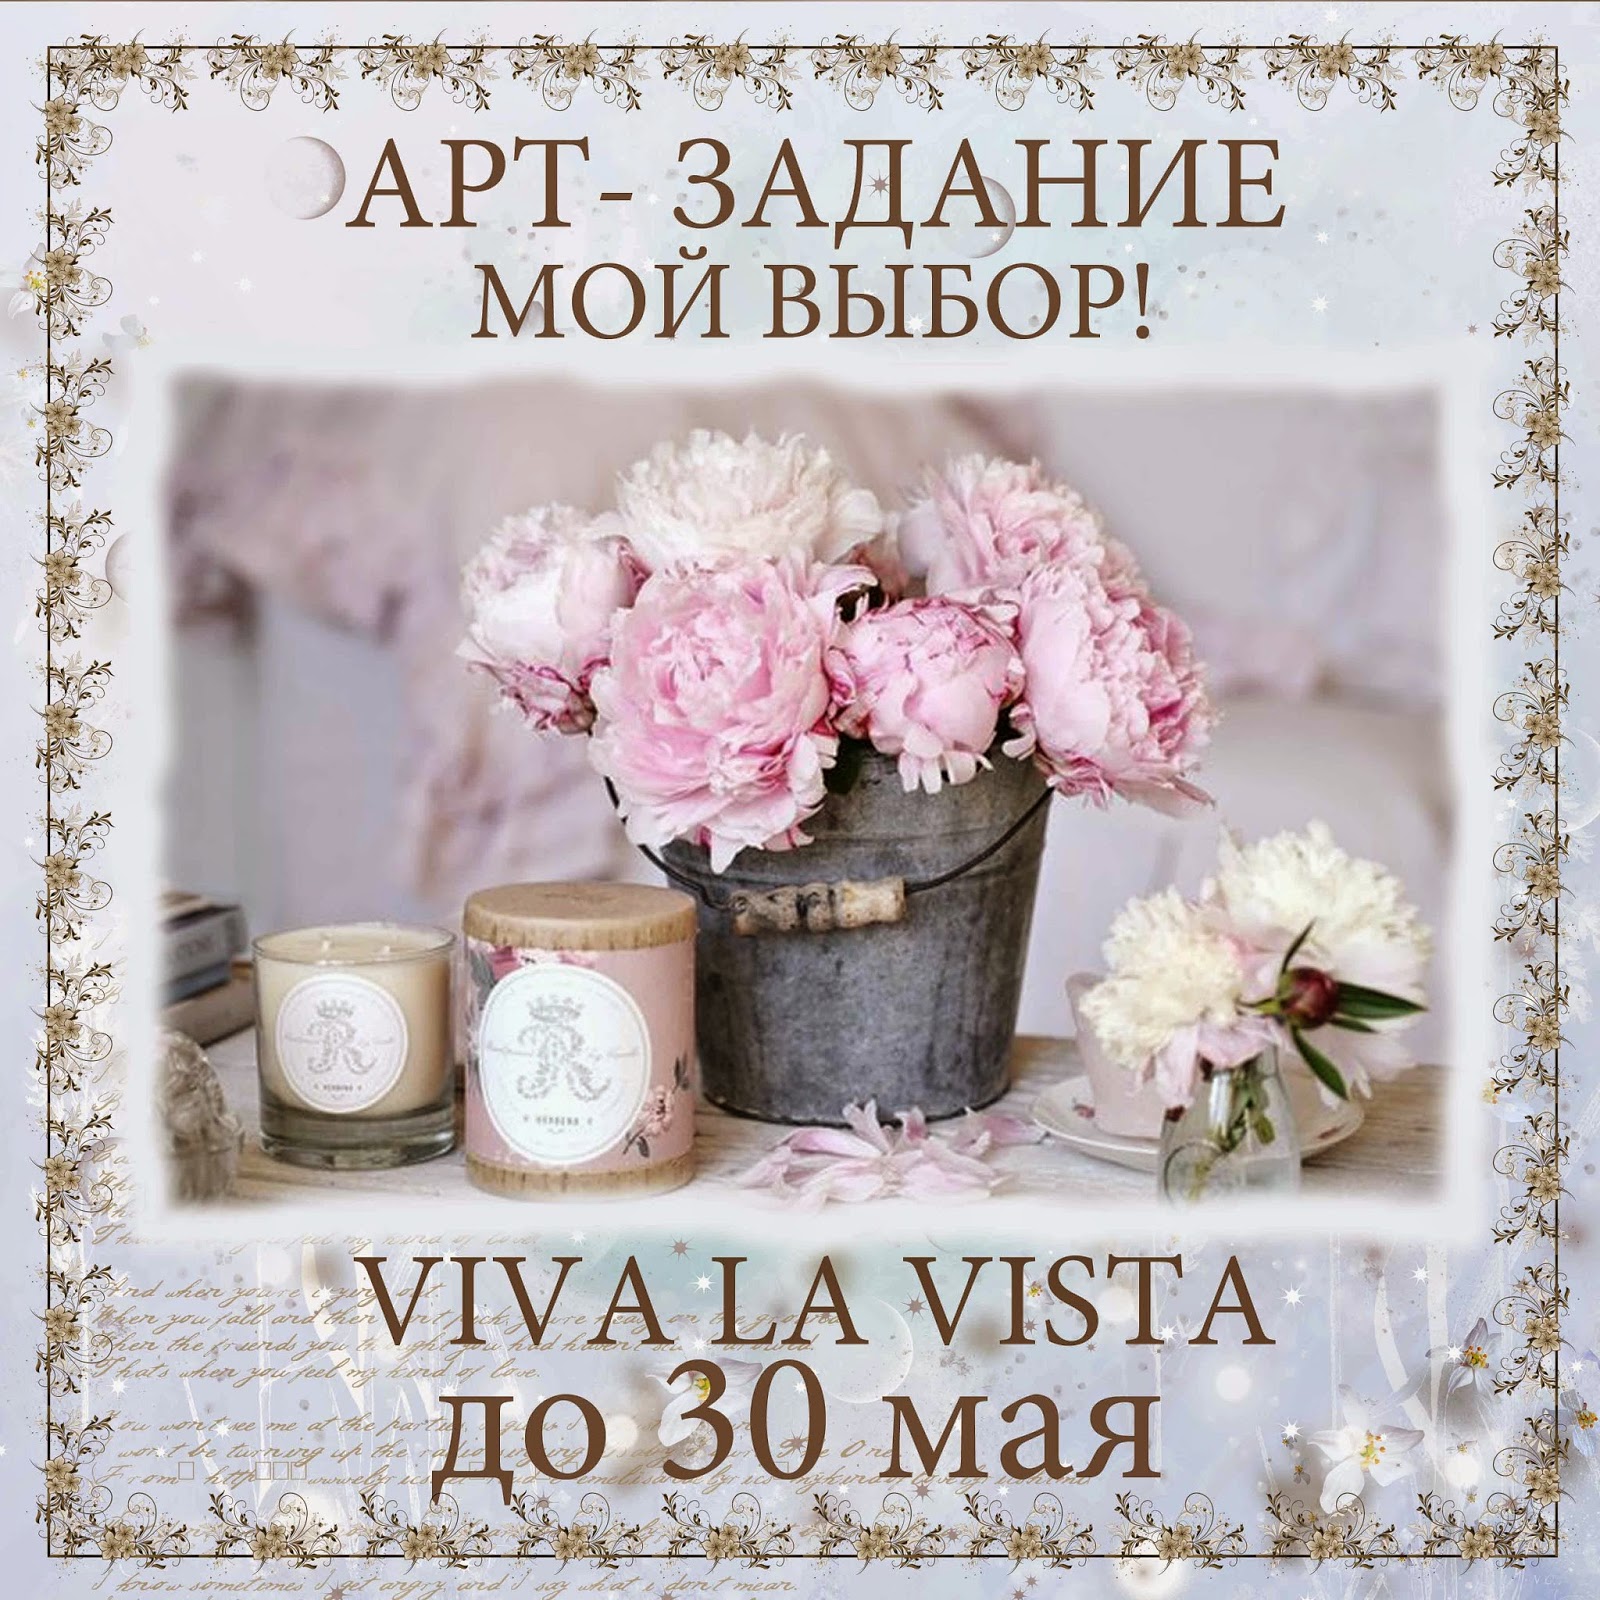 http://vlvista.blogspot.ru/2015/04/blog-post_16.html?showComment=1430164324993#c8369792986297821500